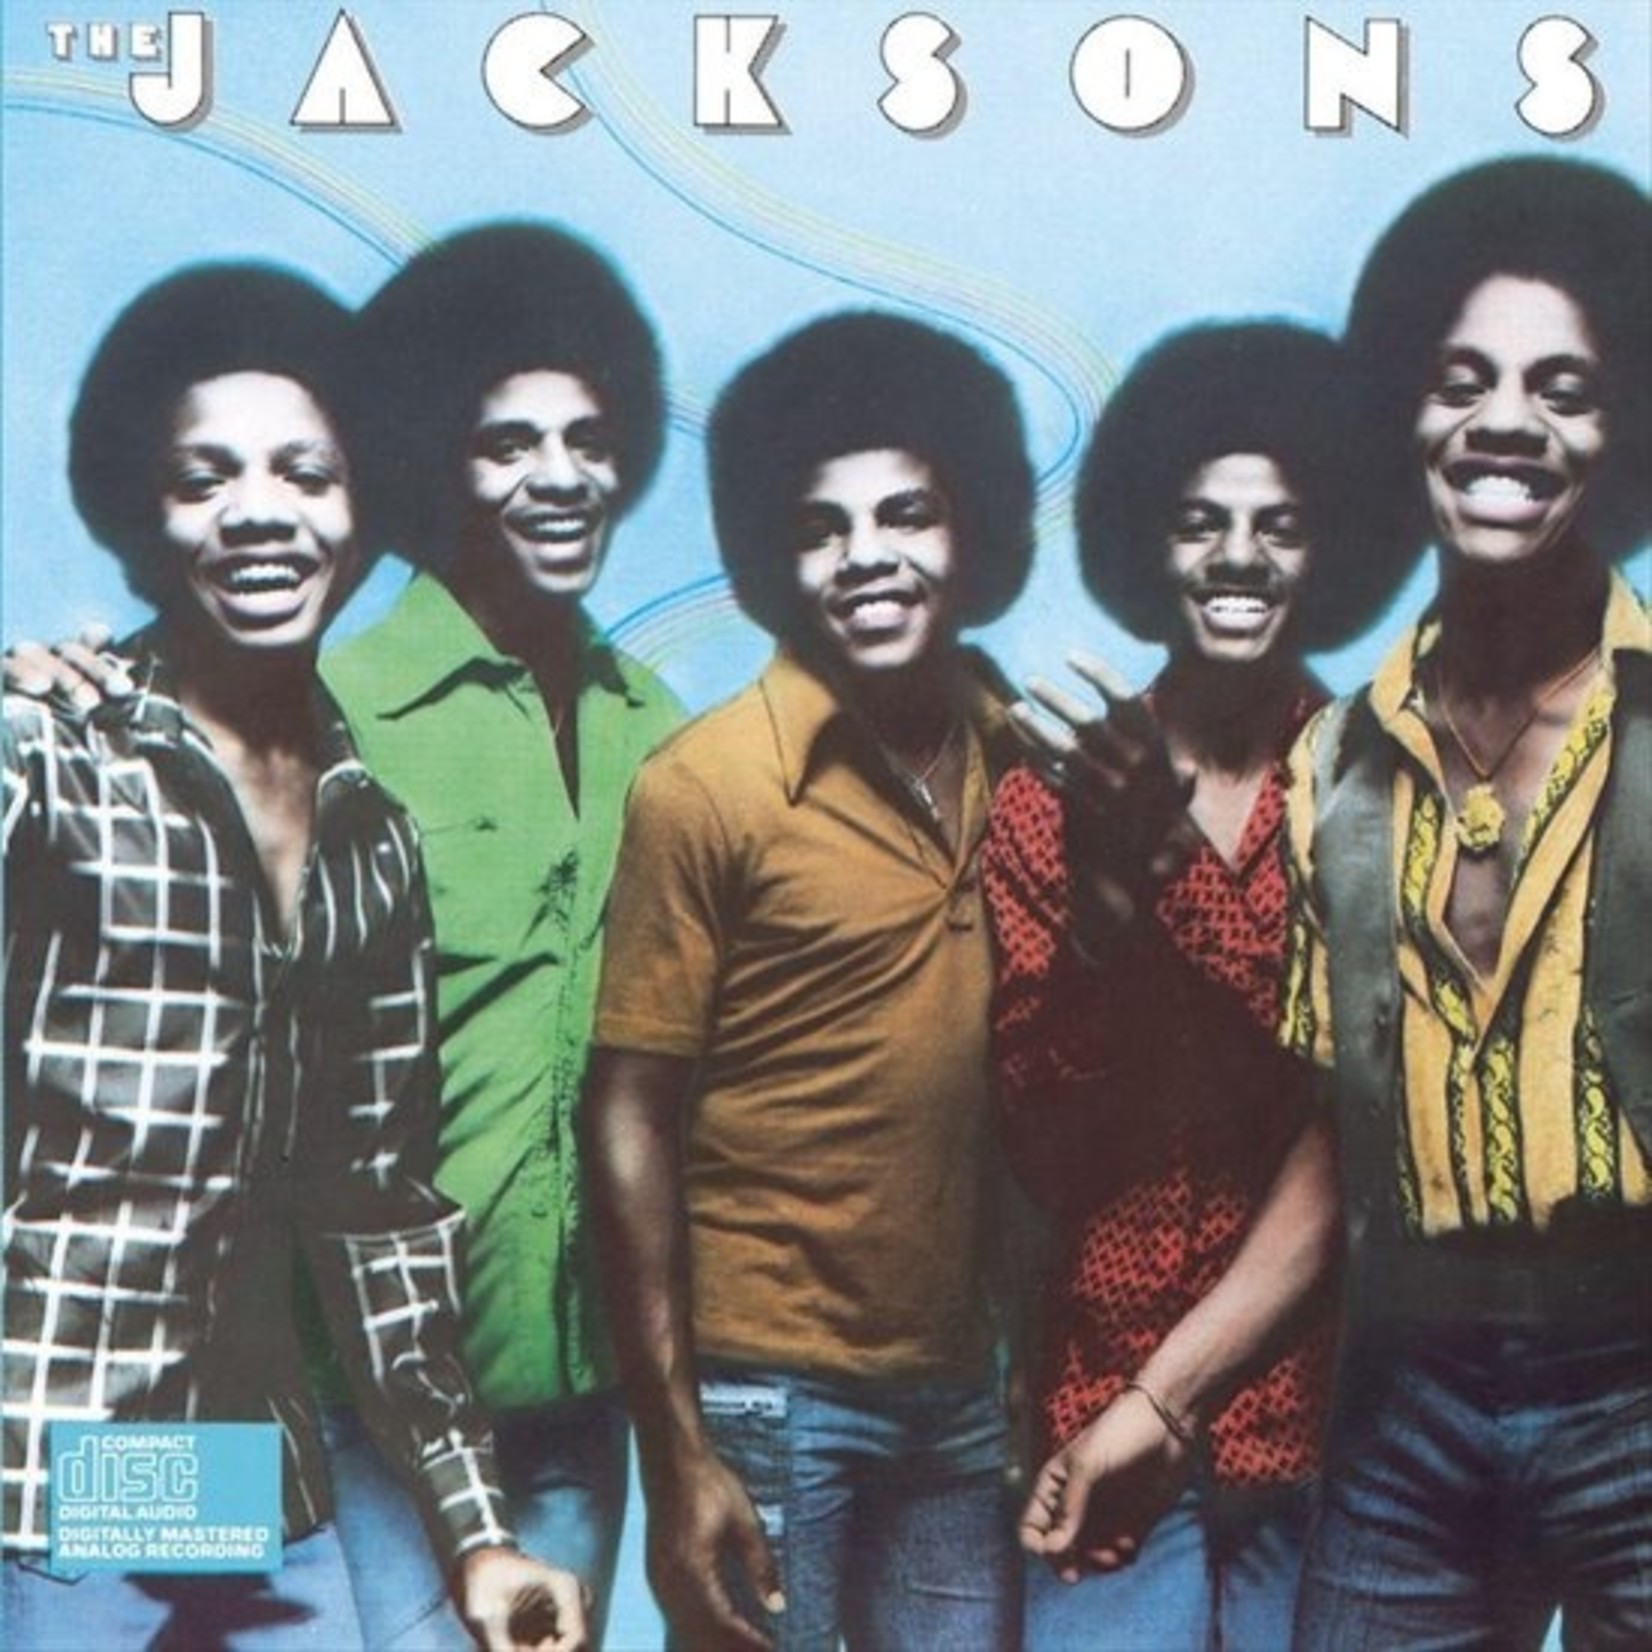 THE JACKSONS - s/t LP